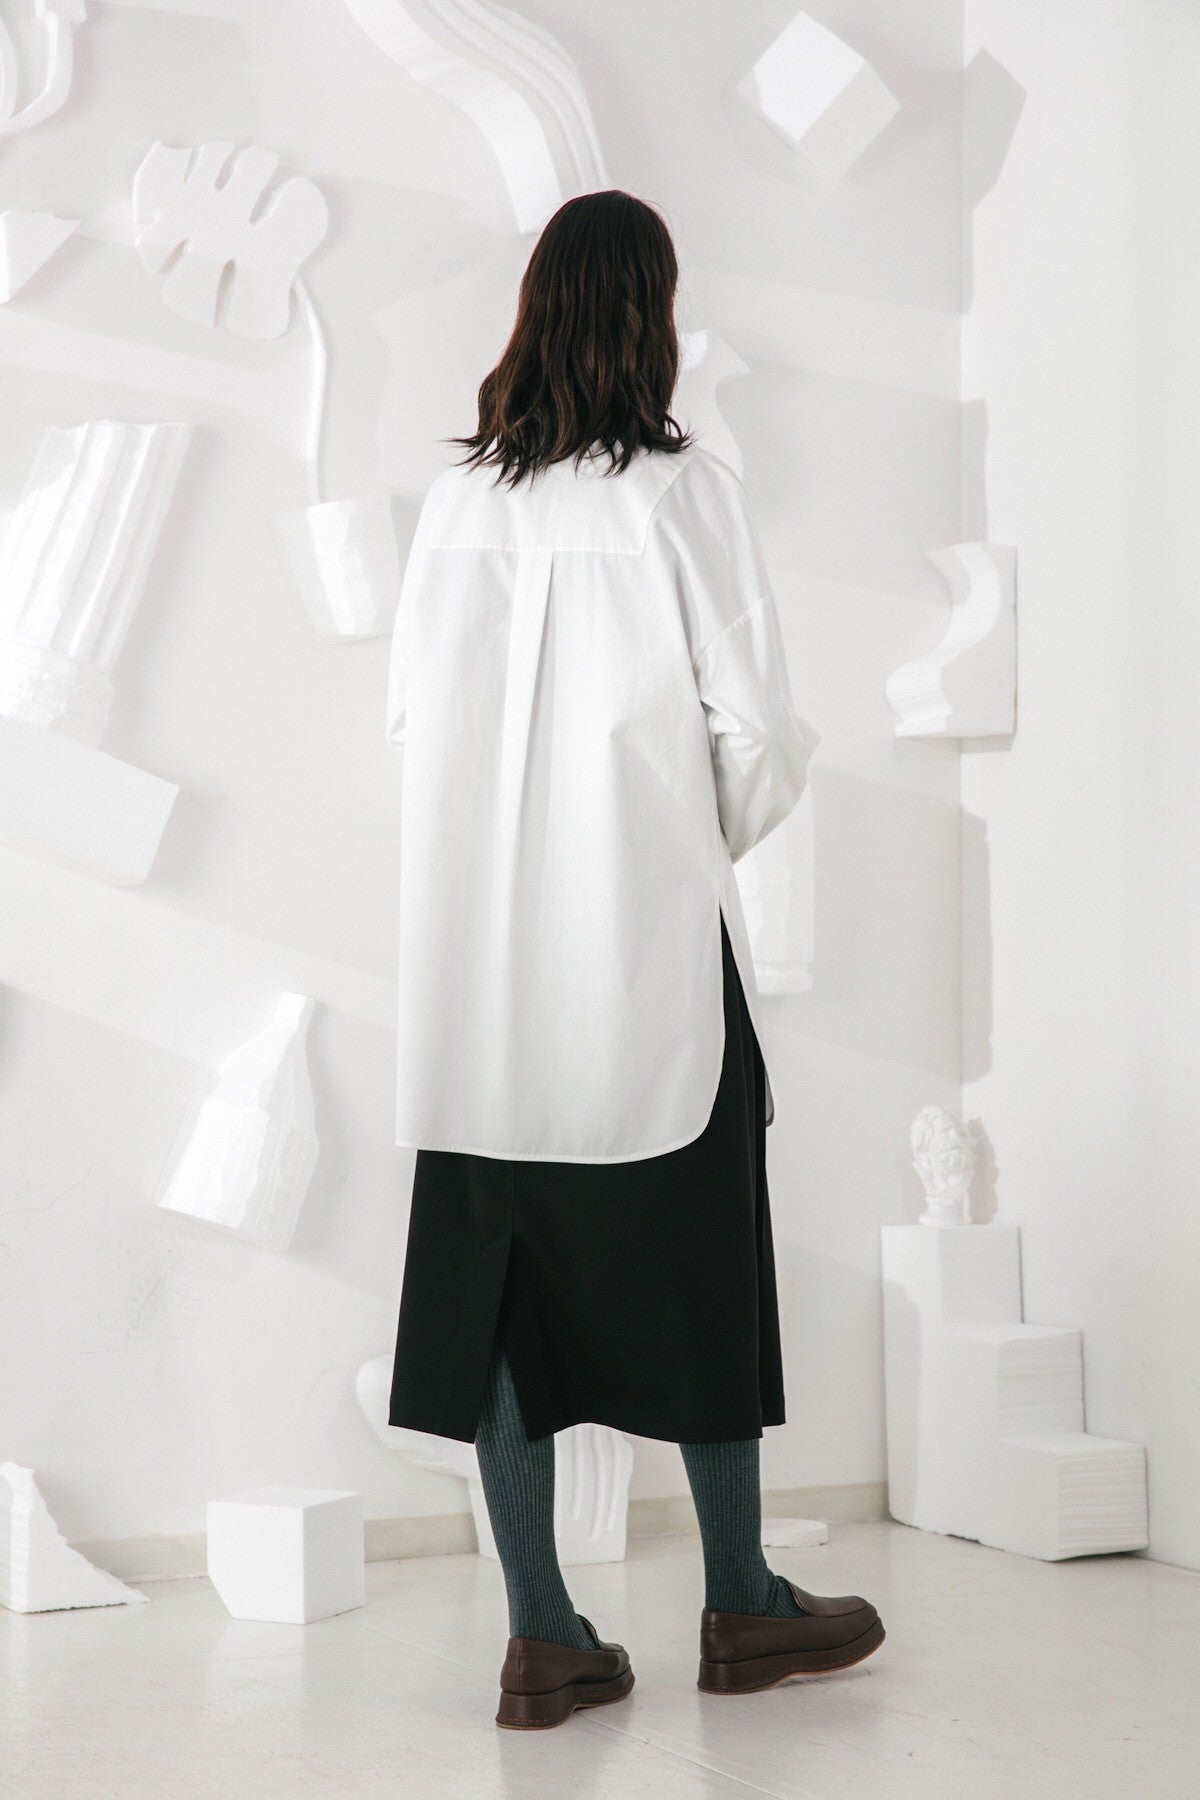 SKYE San Francisco SF shop ethical modern minimalist quality women clothing fashion Brigitte Tunic Shirt white 4